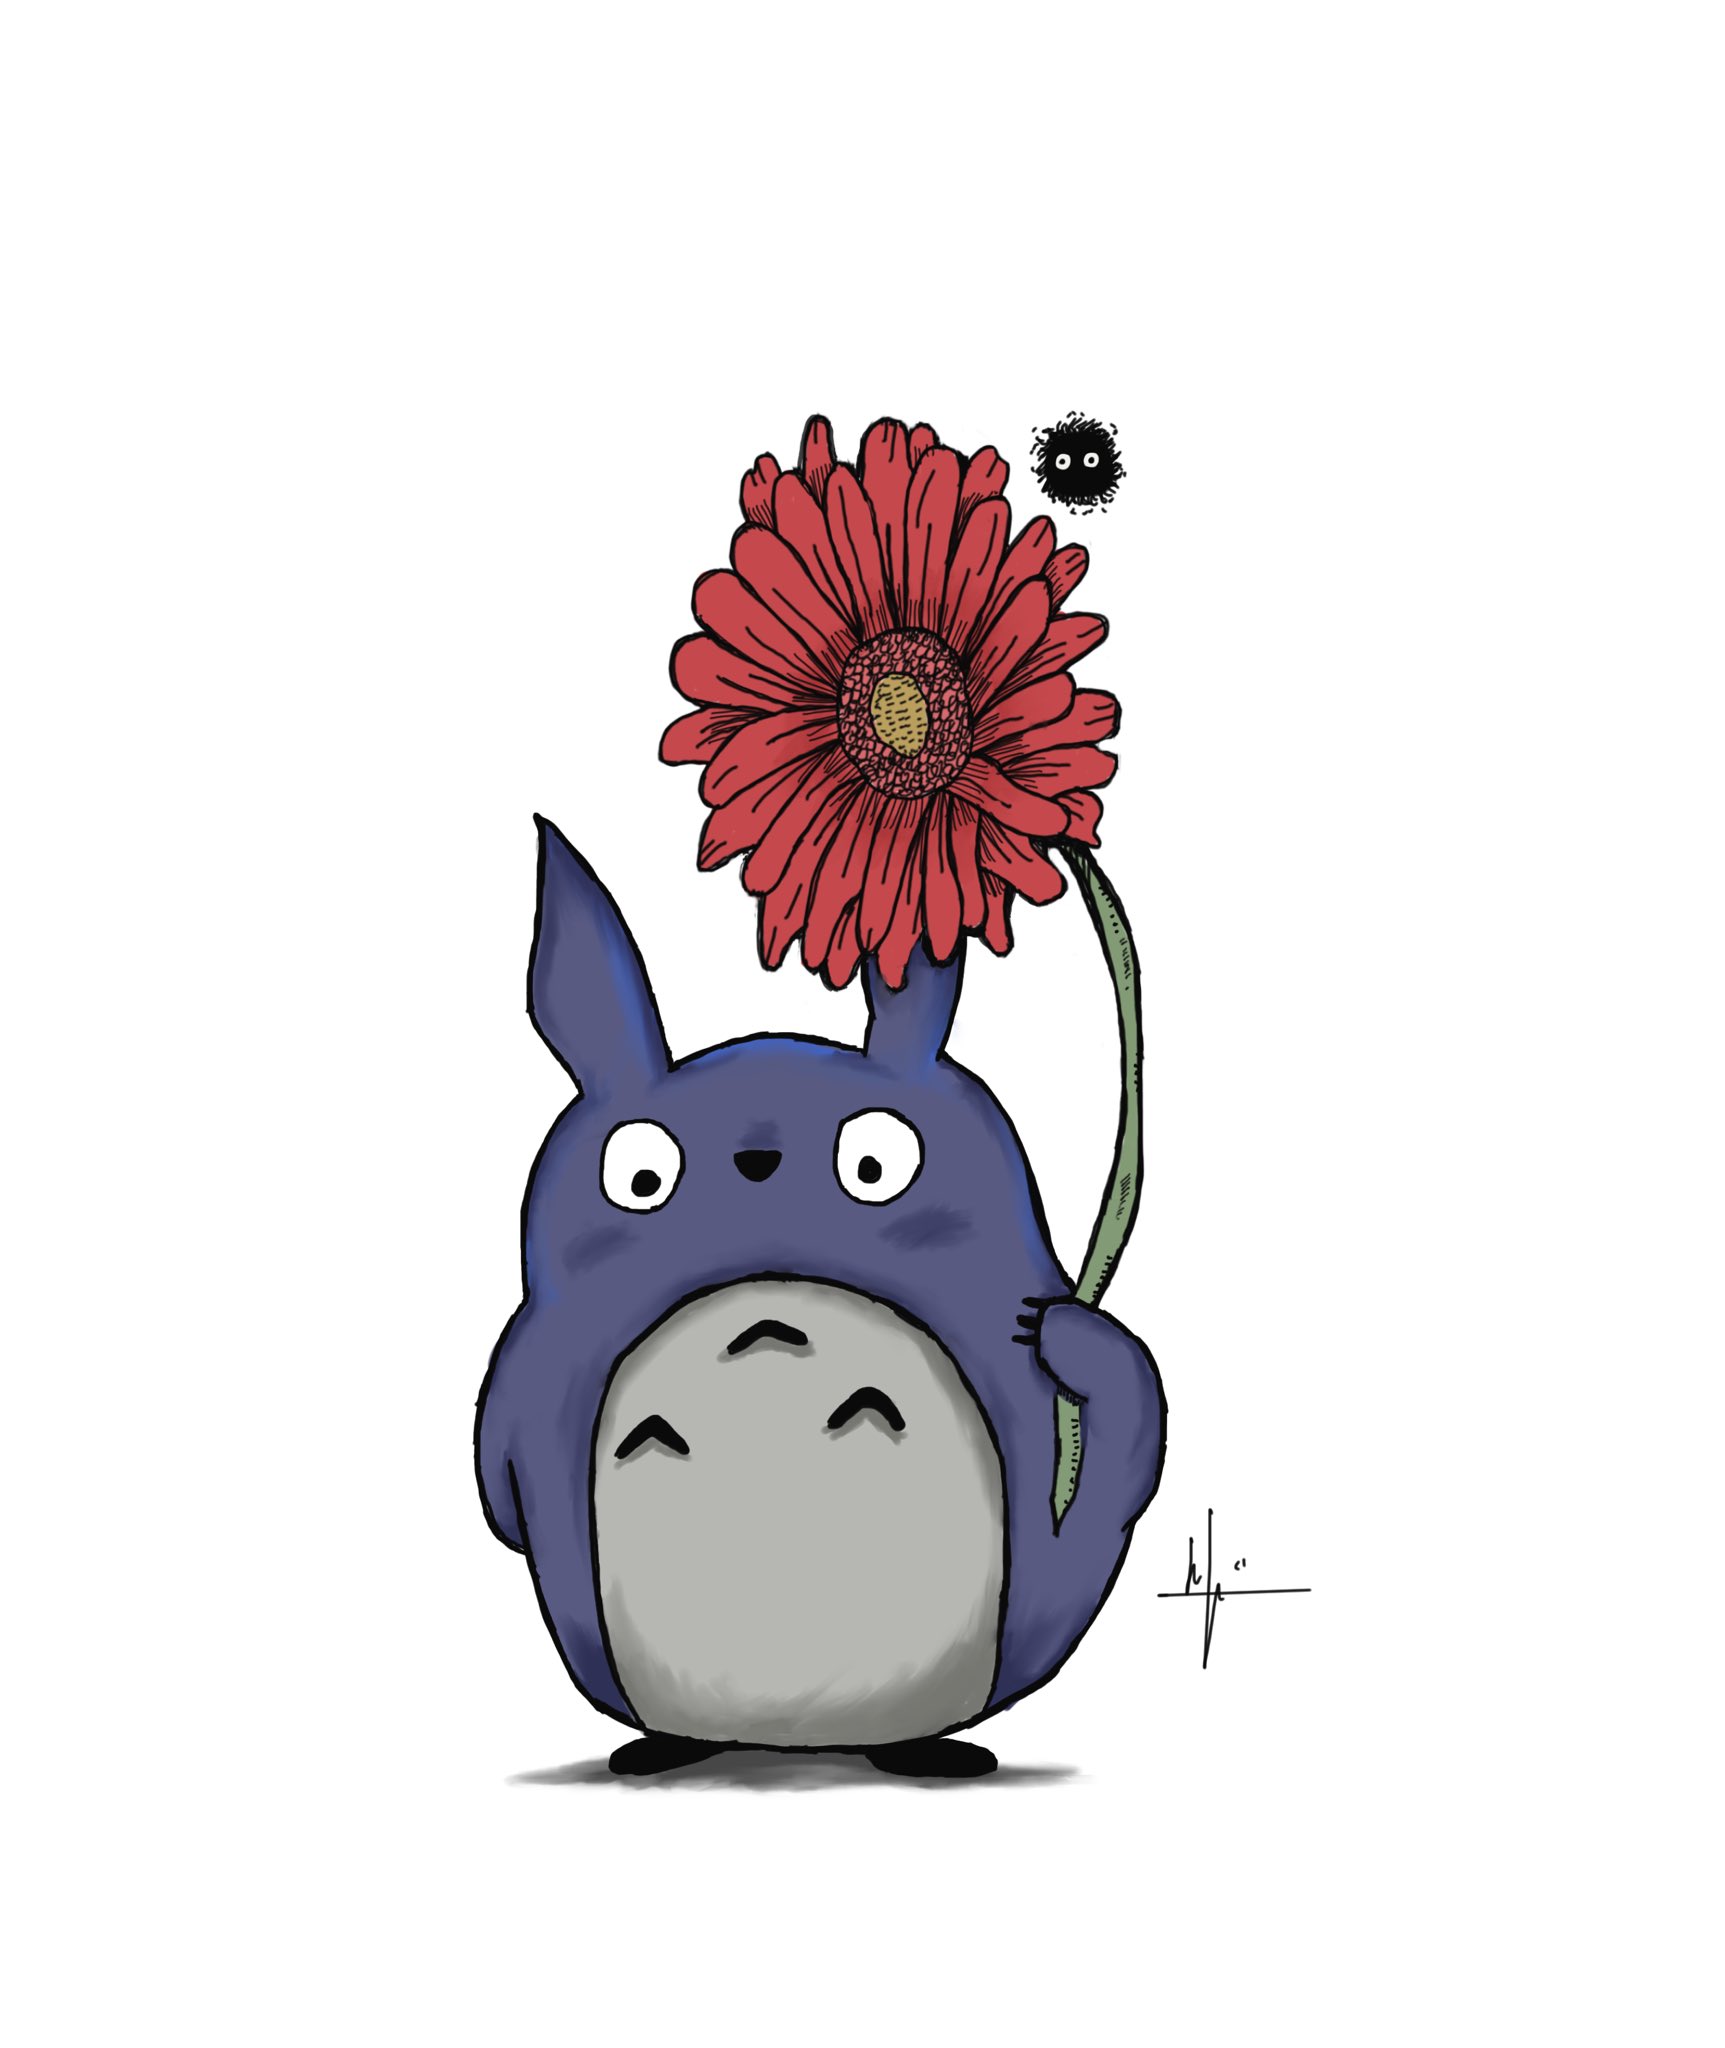 Koji 絵を描きました 10月の誕生花 ガーベラ です 花言葉は 希望 常に前進 10月生まれの方 待ち受けにどうですか 僕も10月生まれです 笑 T Co Glc7xrzodx Twitter